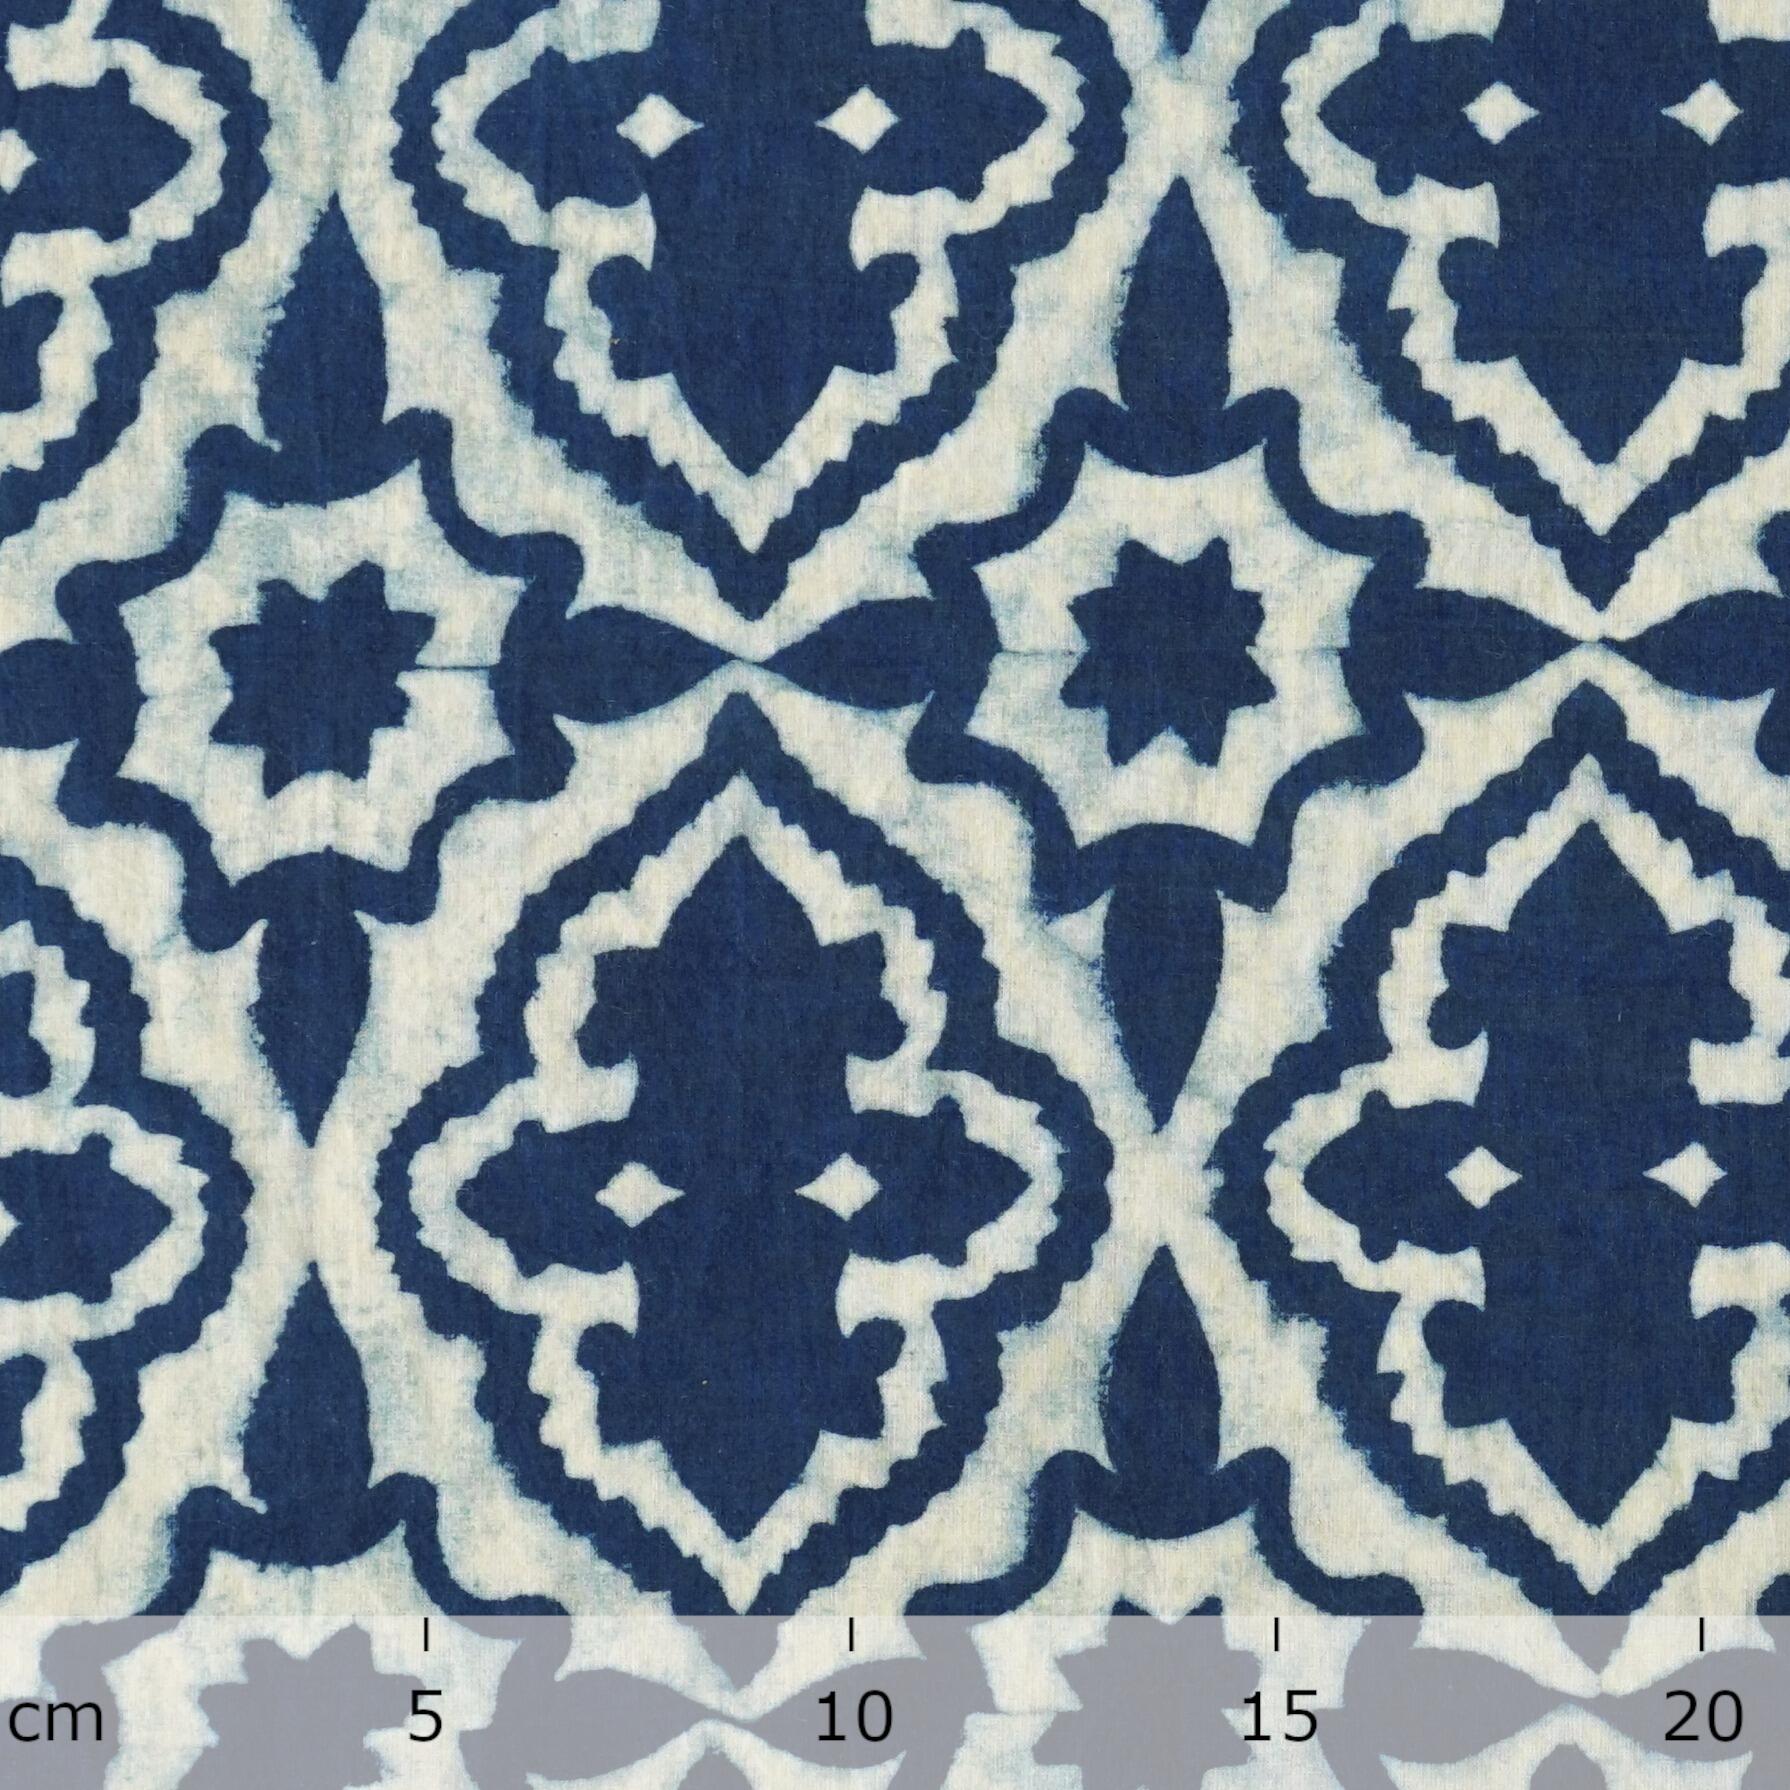 4 - AHM57 - Block-Printed Cotton - Indigo Dye - High Tide Design - Ruler